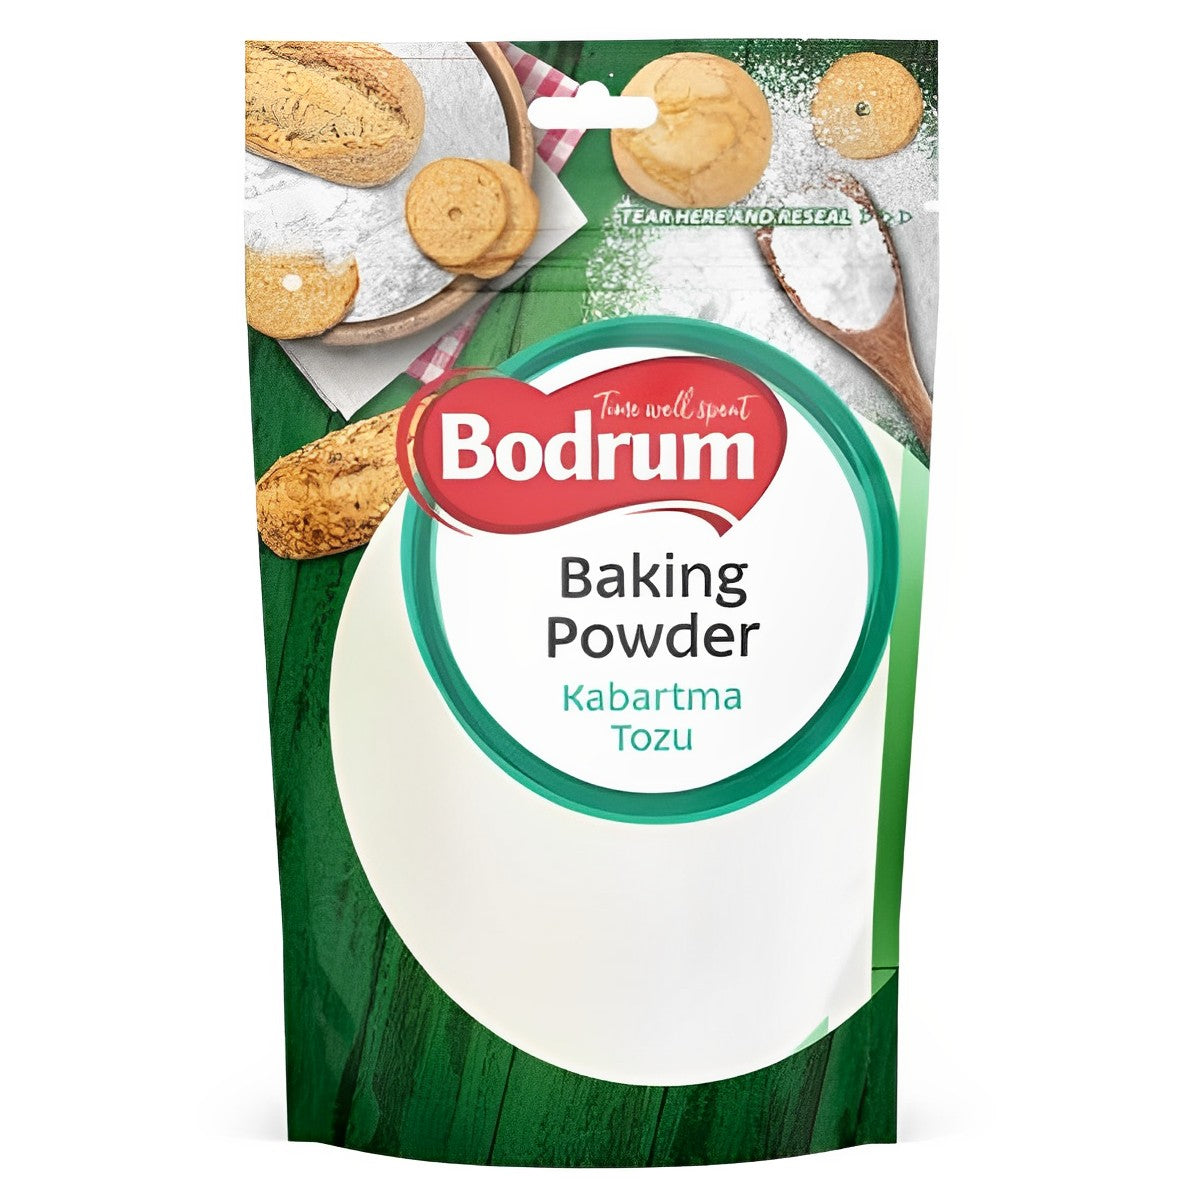 Bodrum - Baking Powder - 100g - Continental Food Store